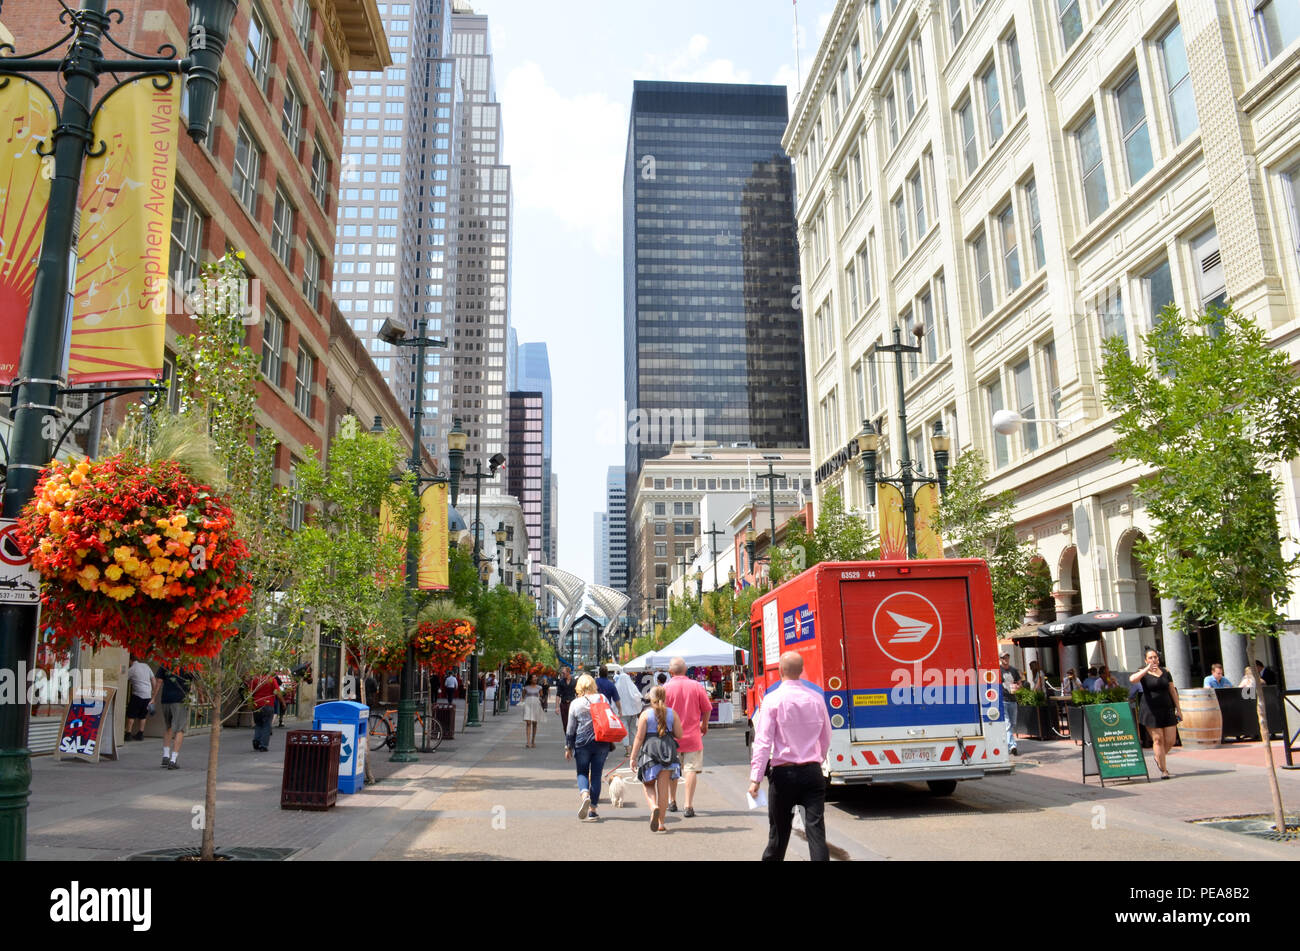 Die Innenstadt von Calgary, Alberta Kanada Stockfoto